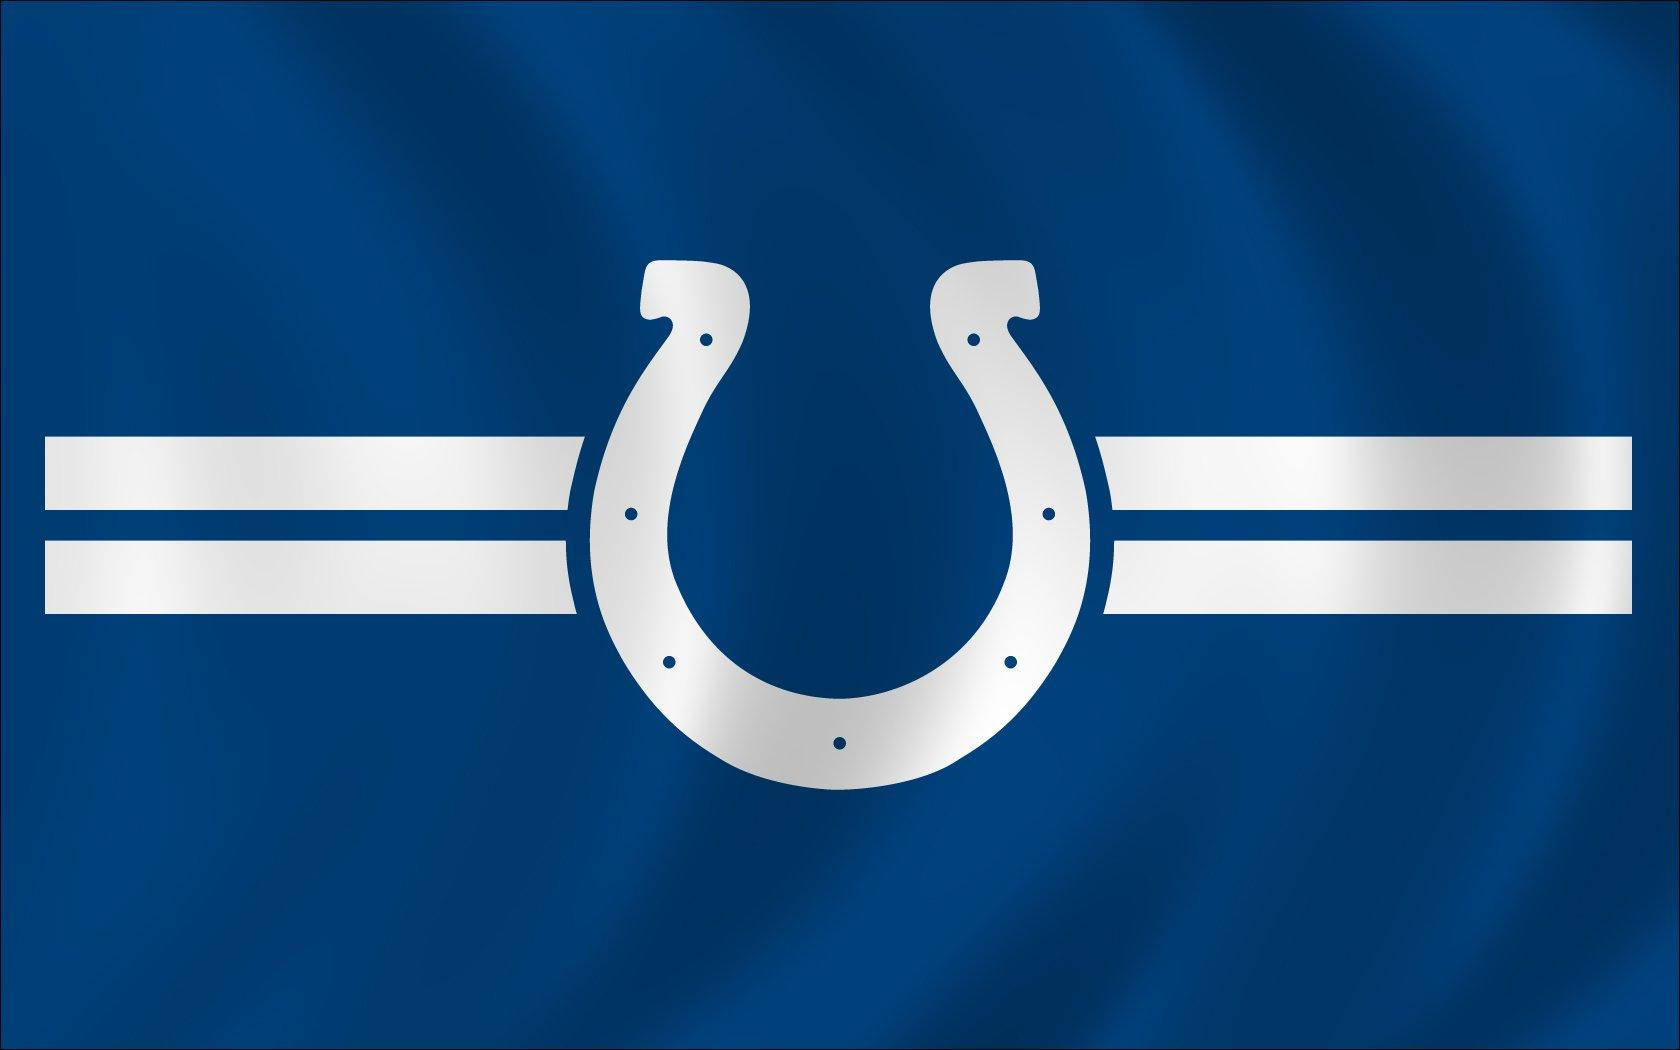 Minimalist Indianapolis Colts Wallpaper